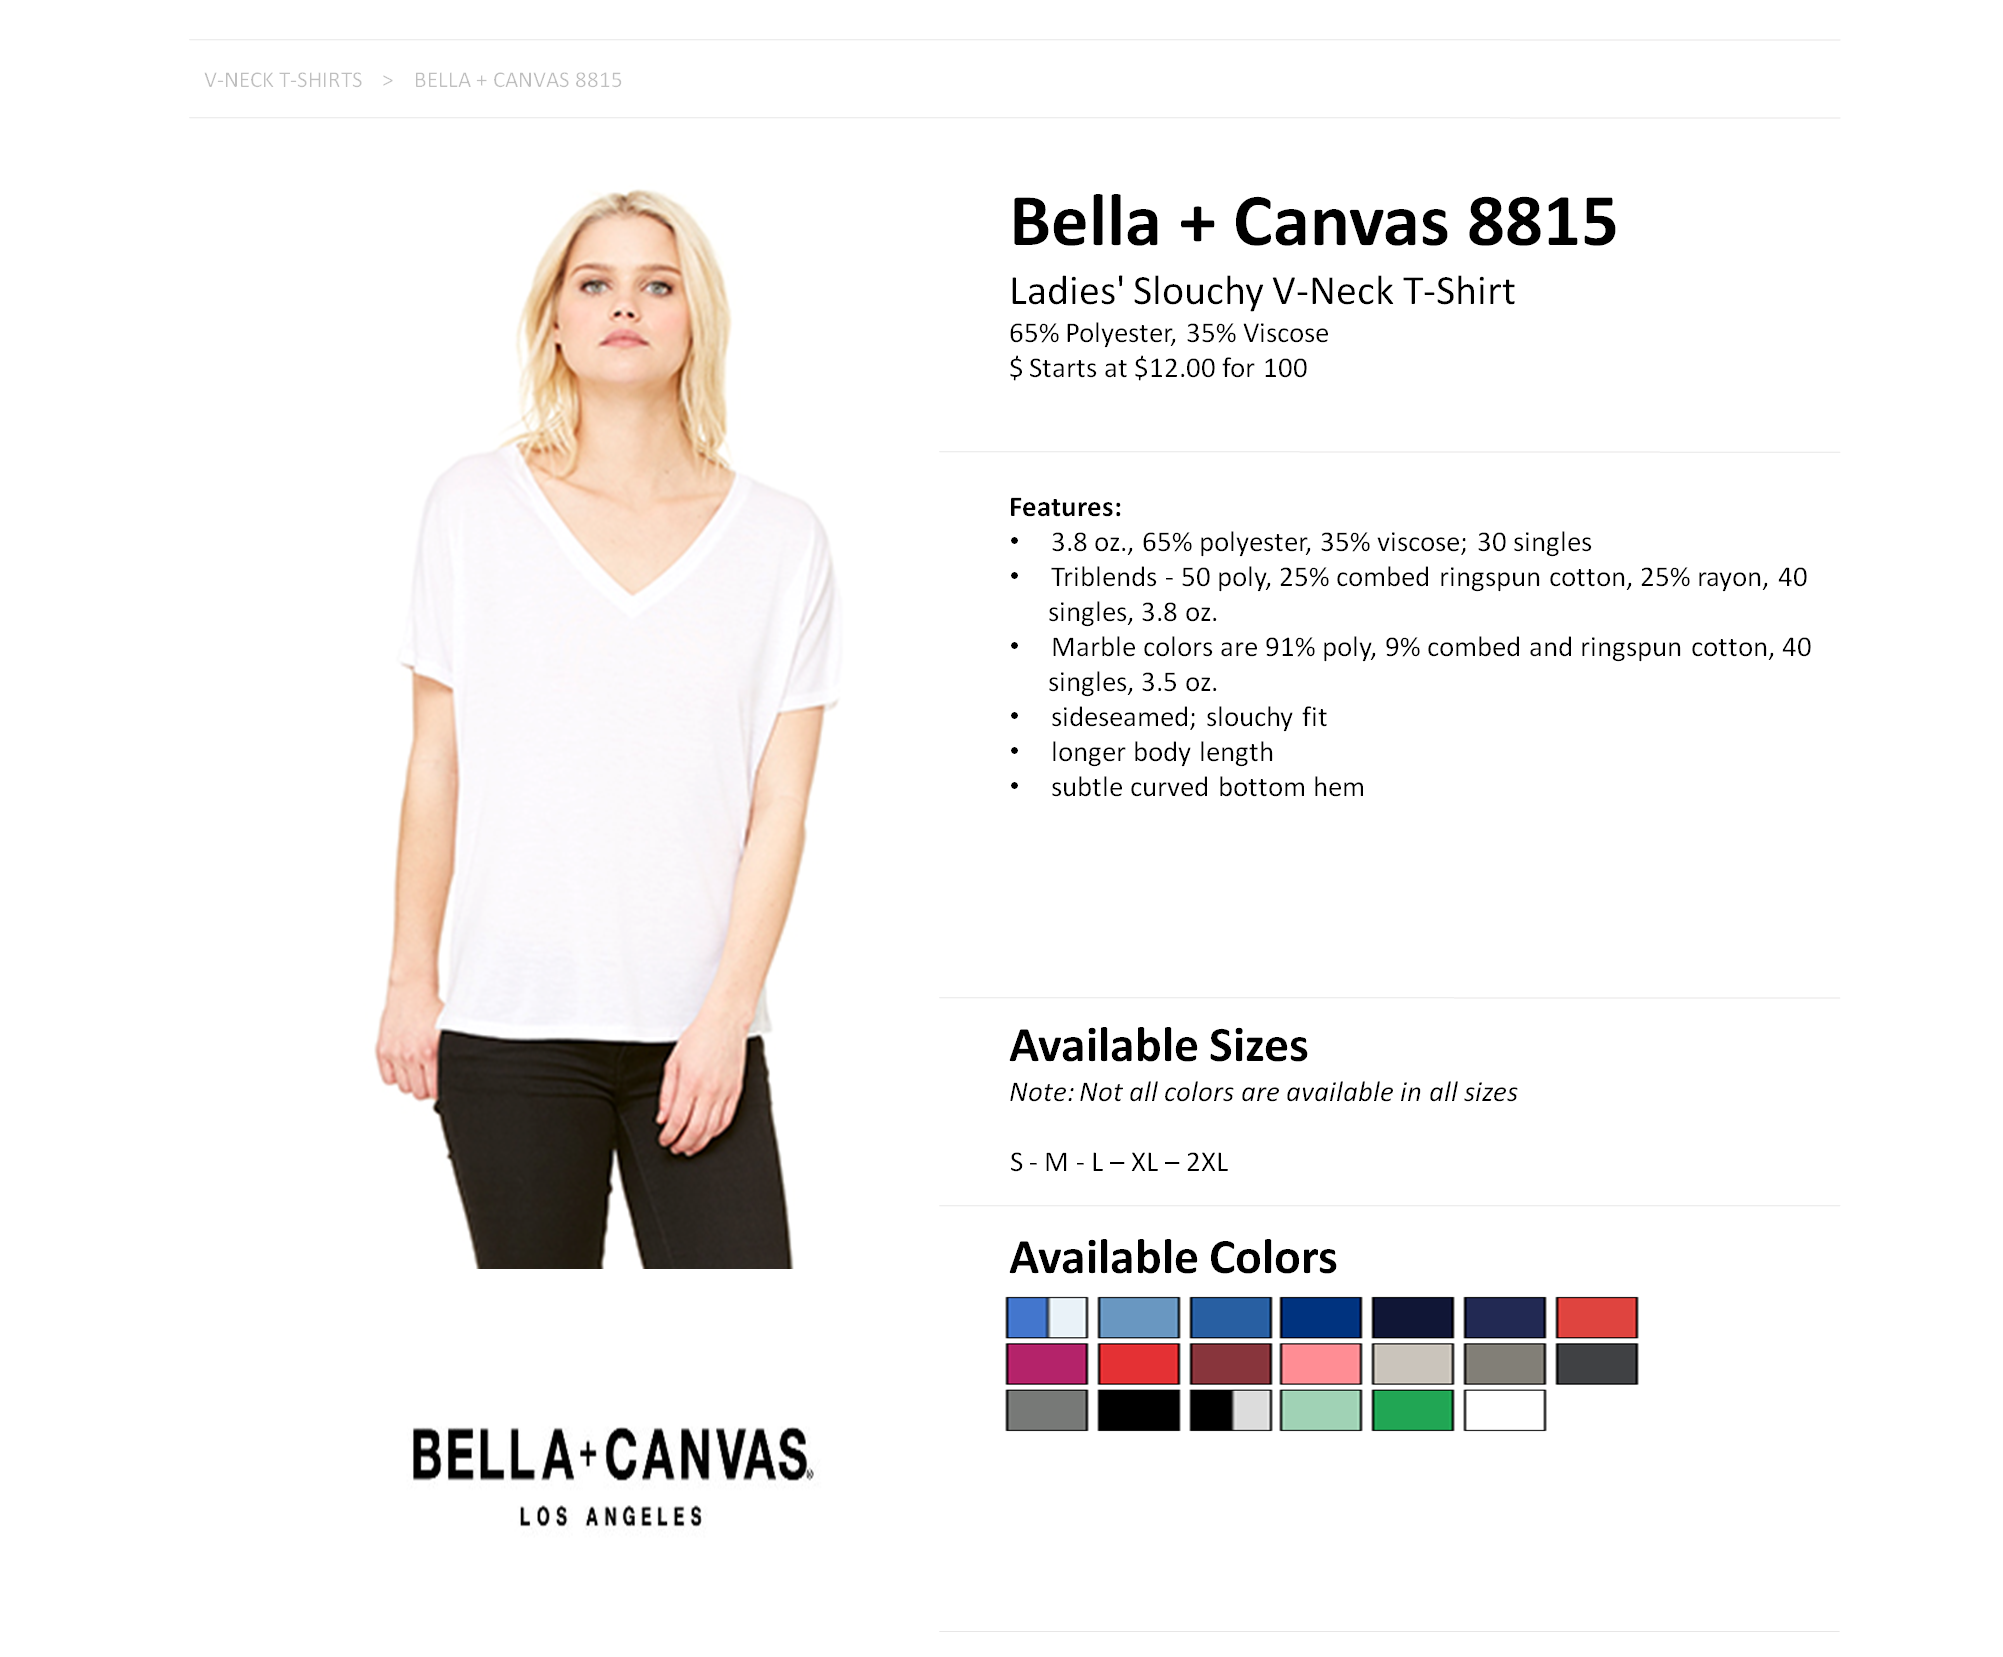 Bella Canvas V Neck Size Chart